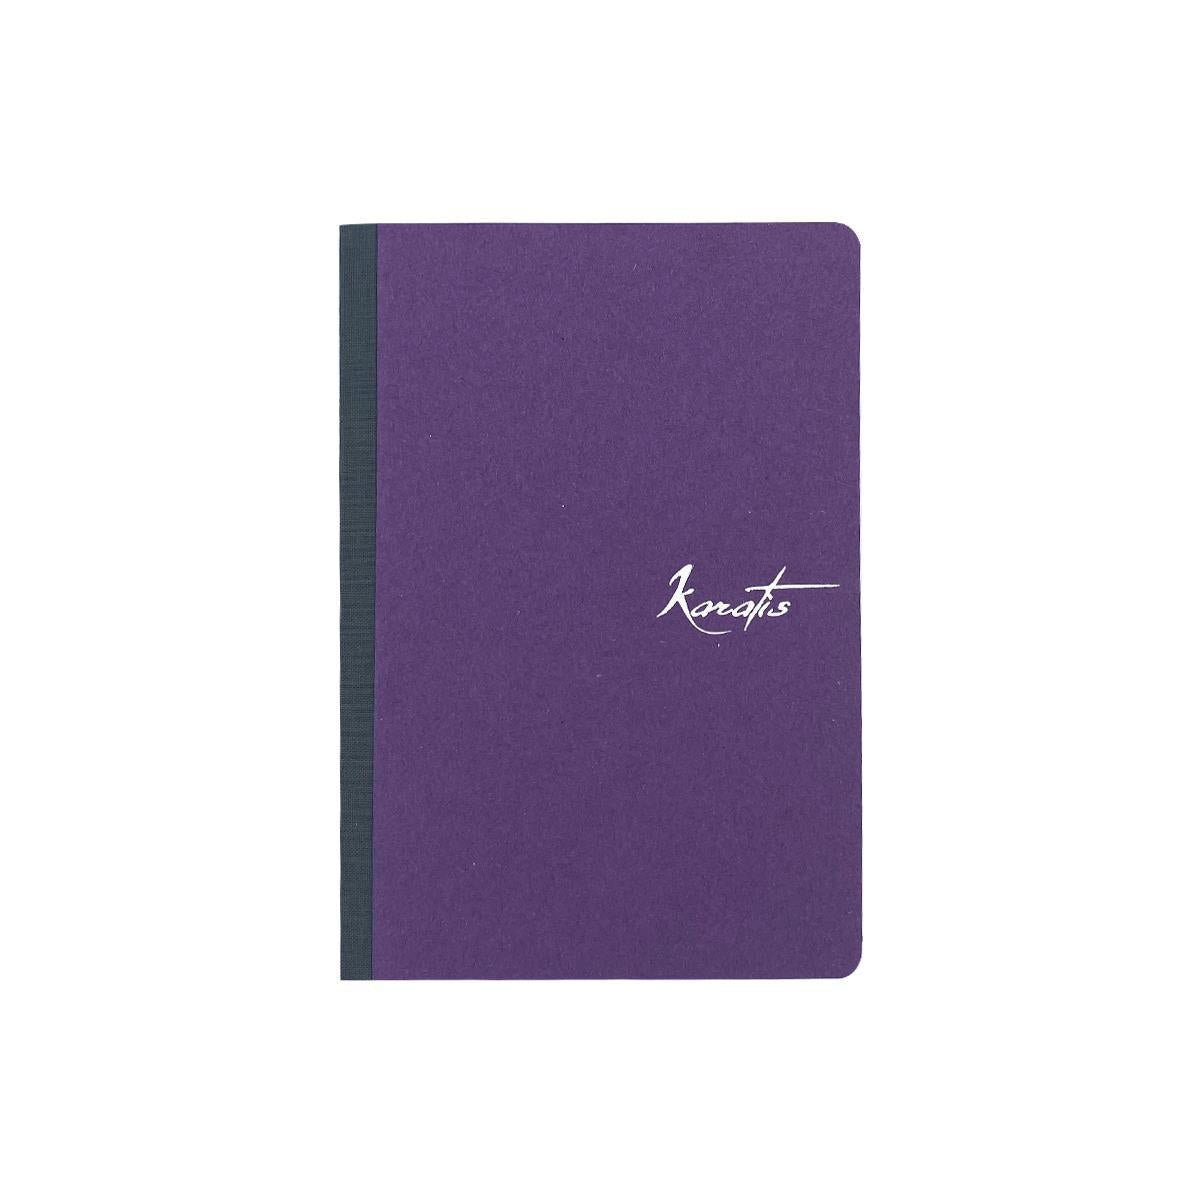 Karatis Aster Tomoe River Paper Notebook